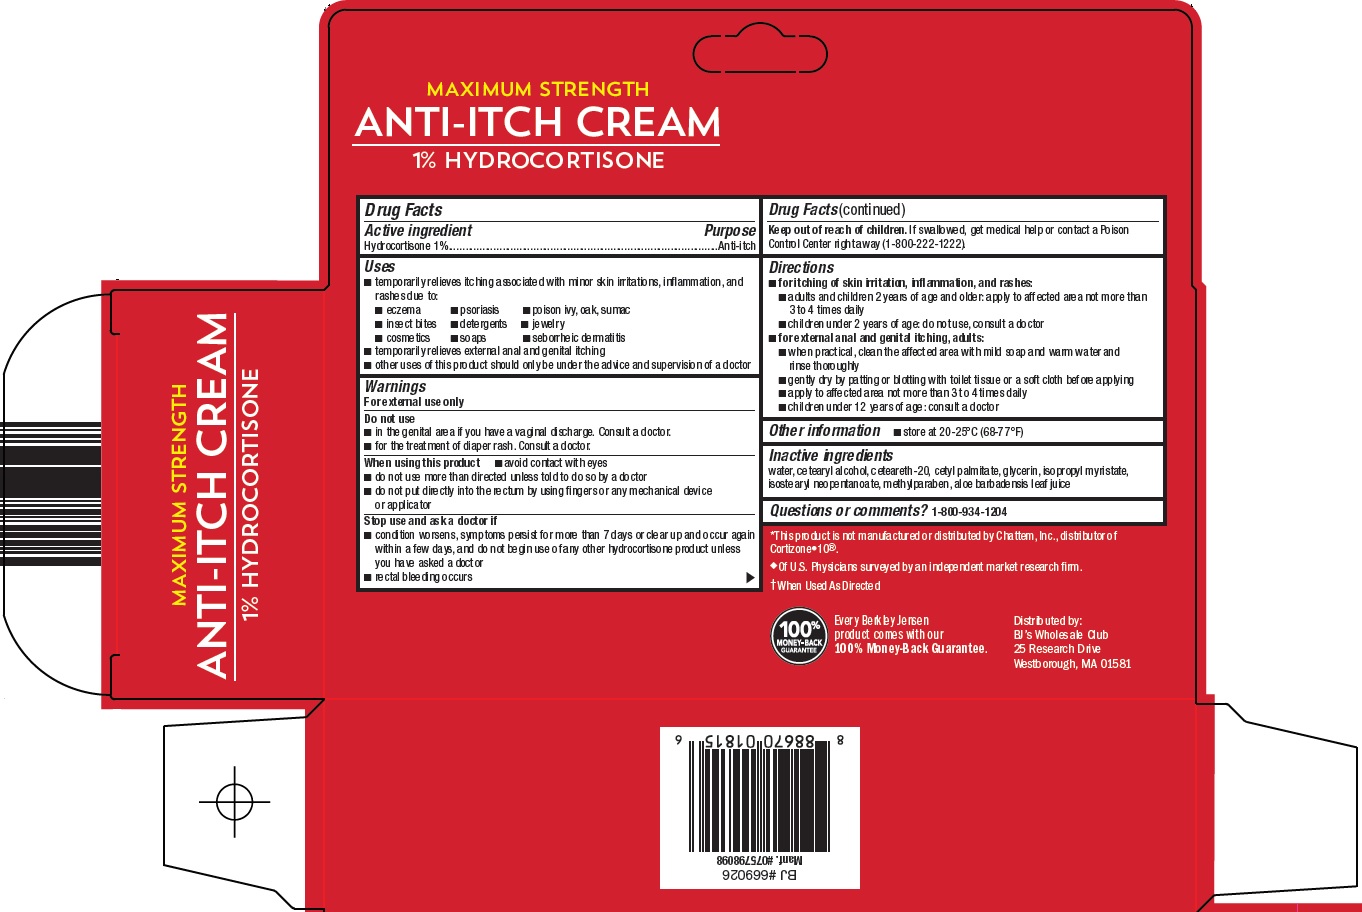 Anti-Itch Cream Carton Image 2